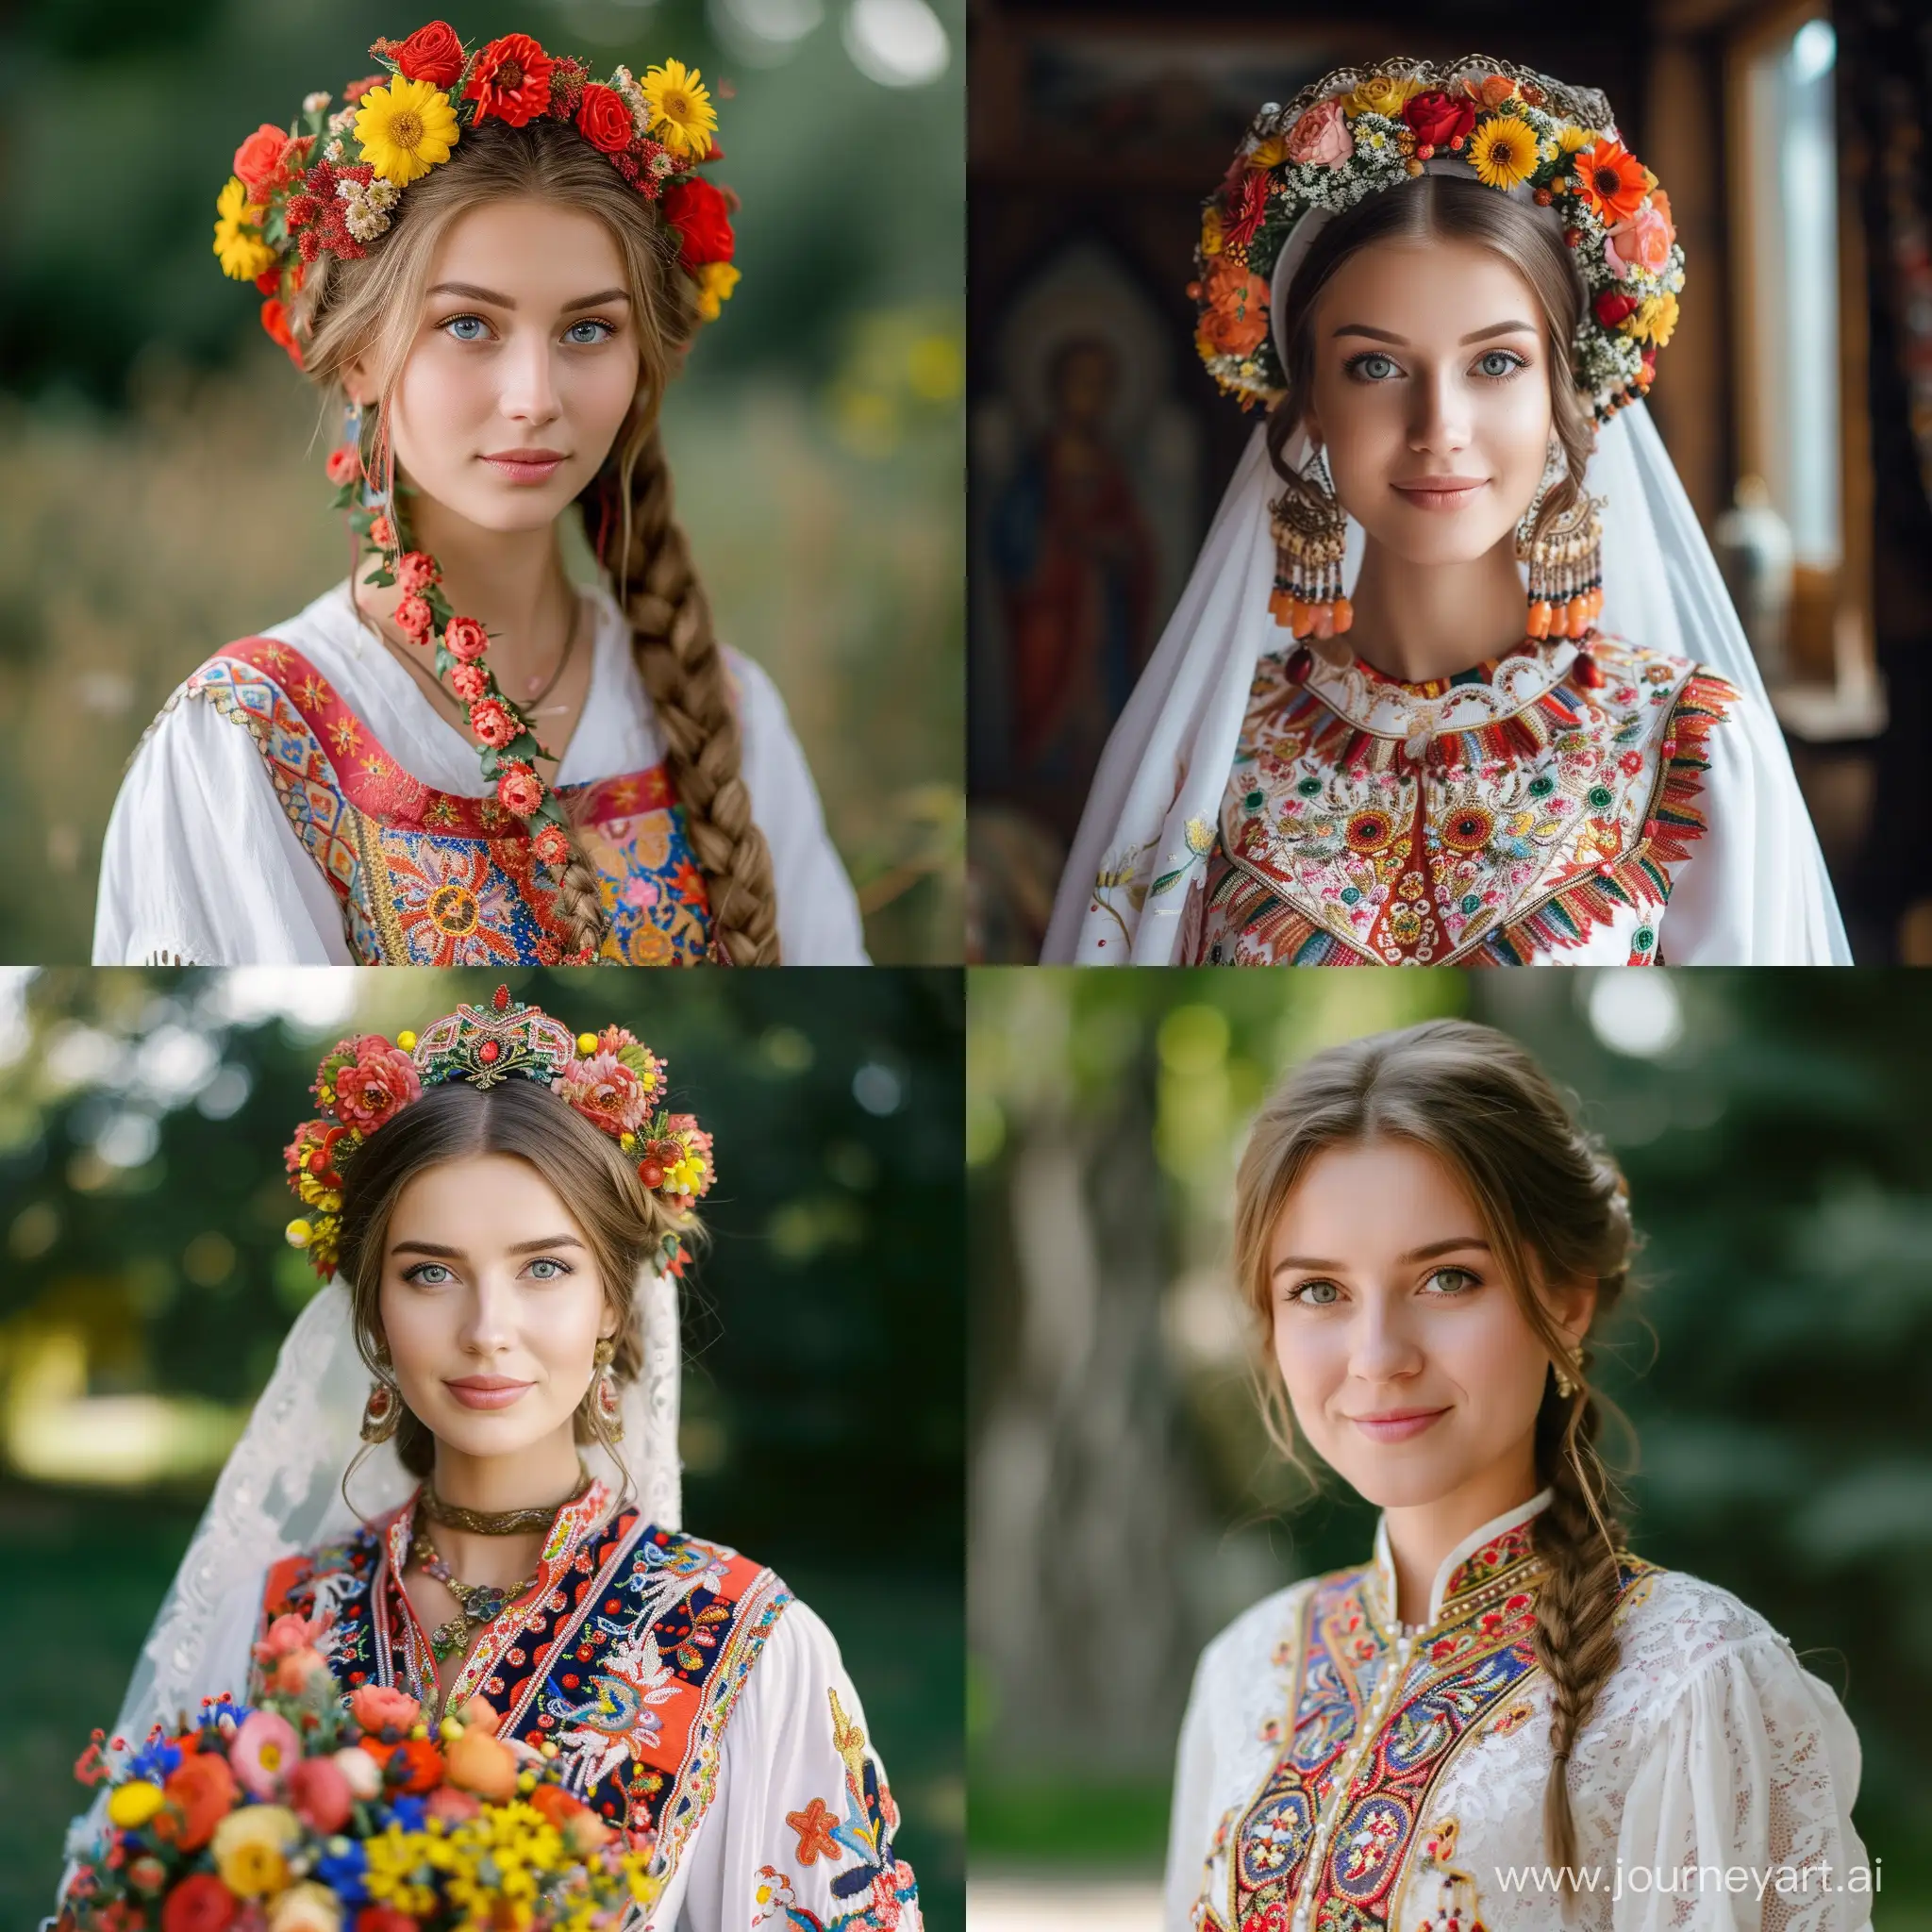 Traditional-Ukrainian-Bride-in-Ornate-Costume